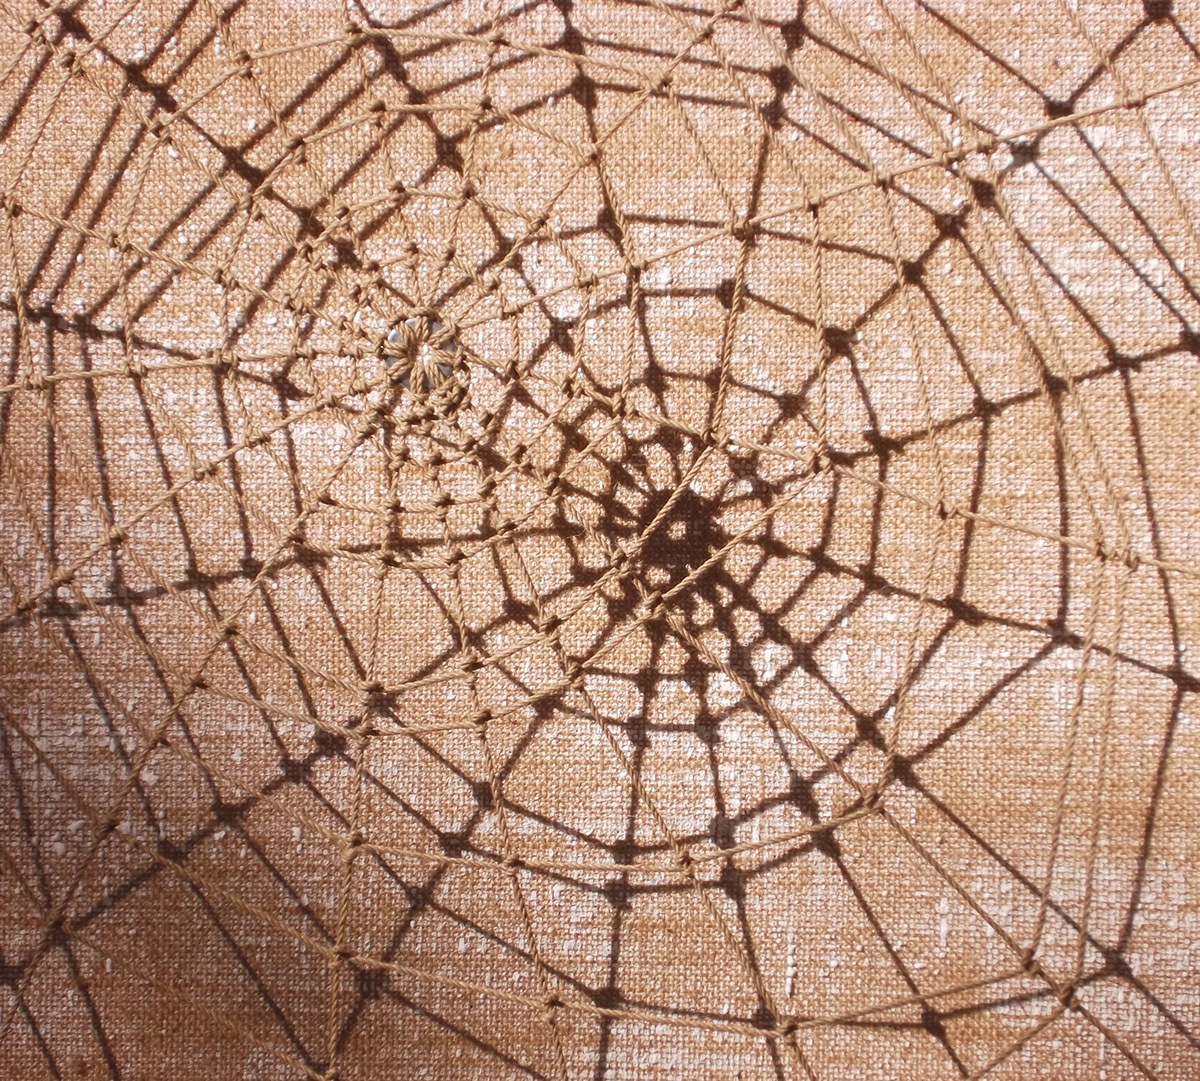 spiderweb toiled'araign ragnatela Hemp rope corde chanvre corda canapa toiledejute jutecanvas iuta sculpture scultura